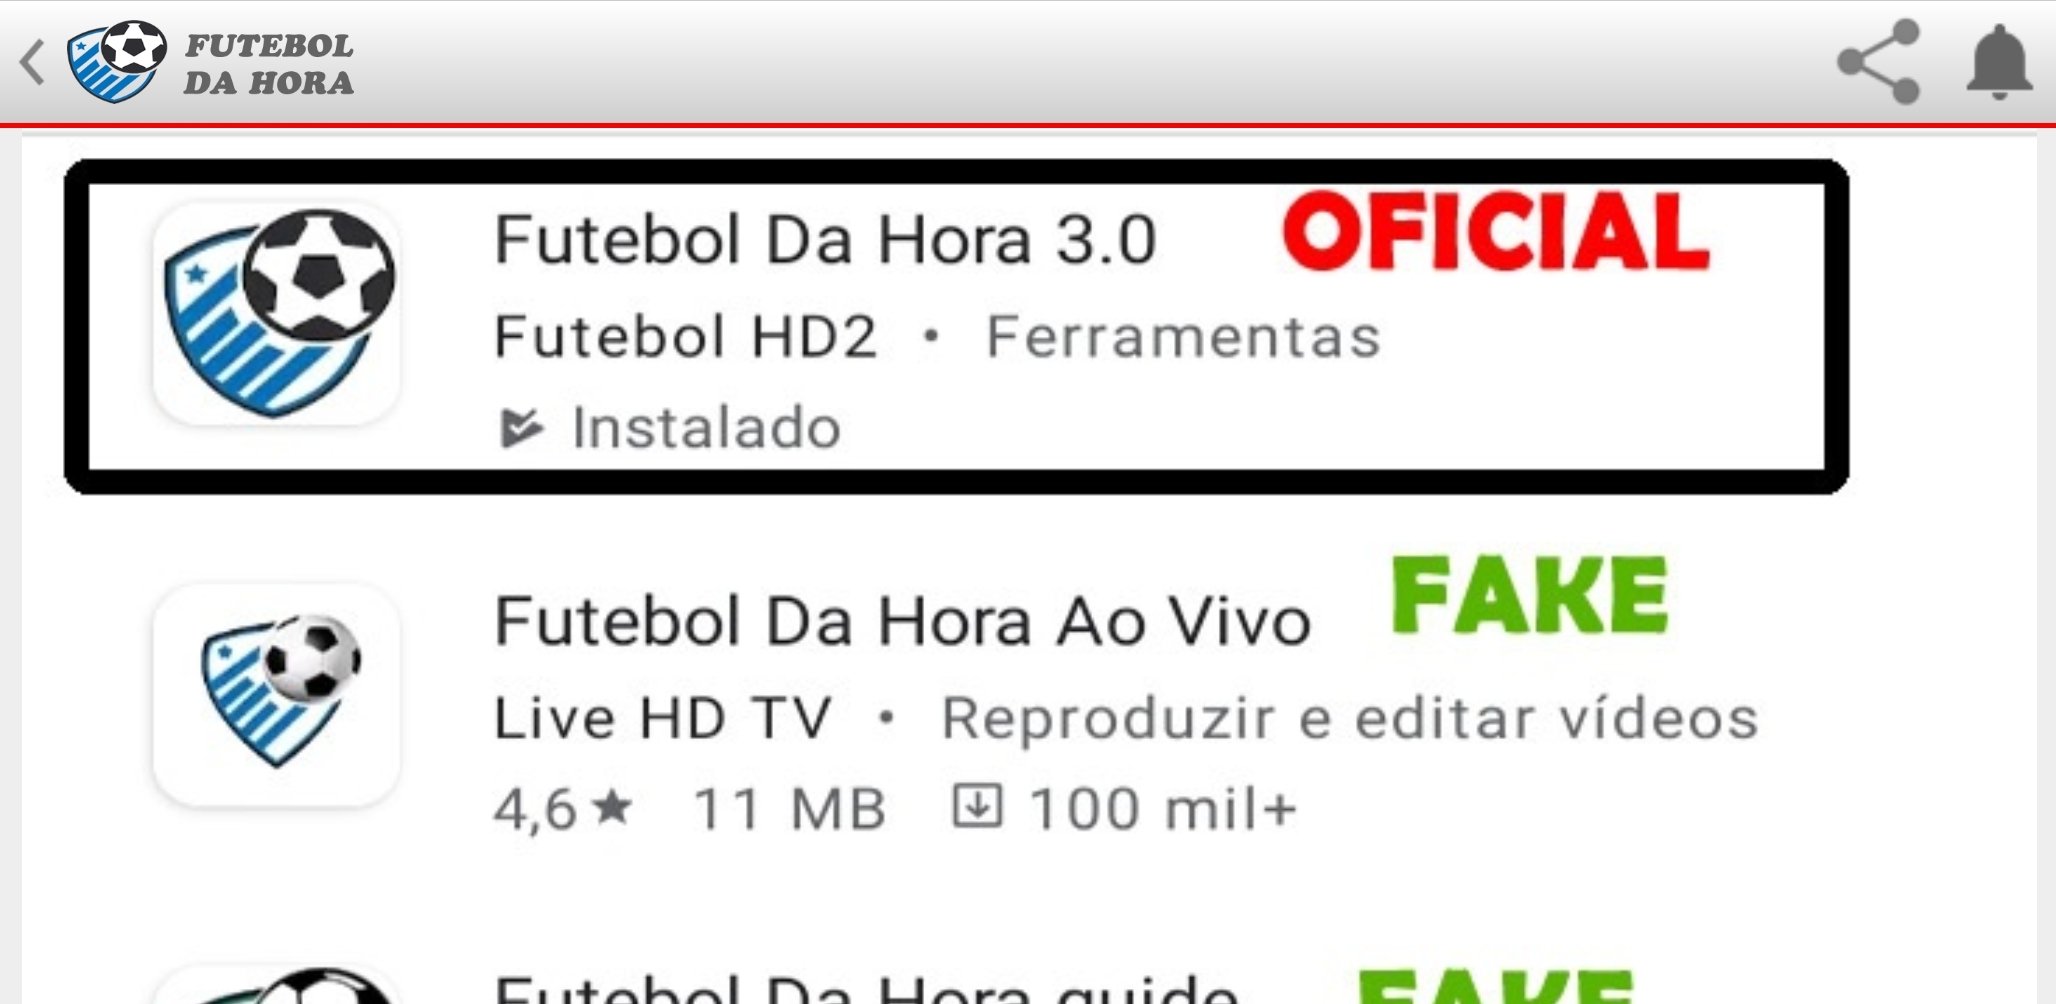 ASSISTIR FUTEBOL AO VIVO HD APK (Android App) - Free Download